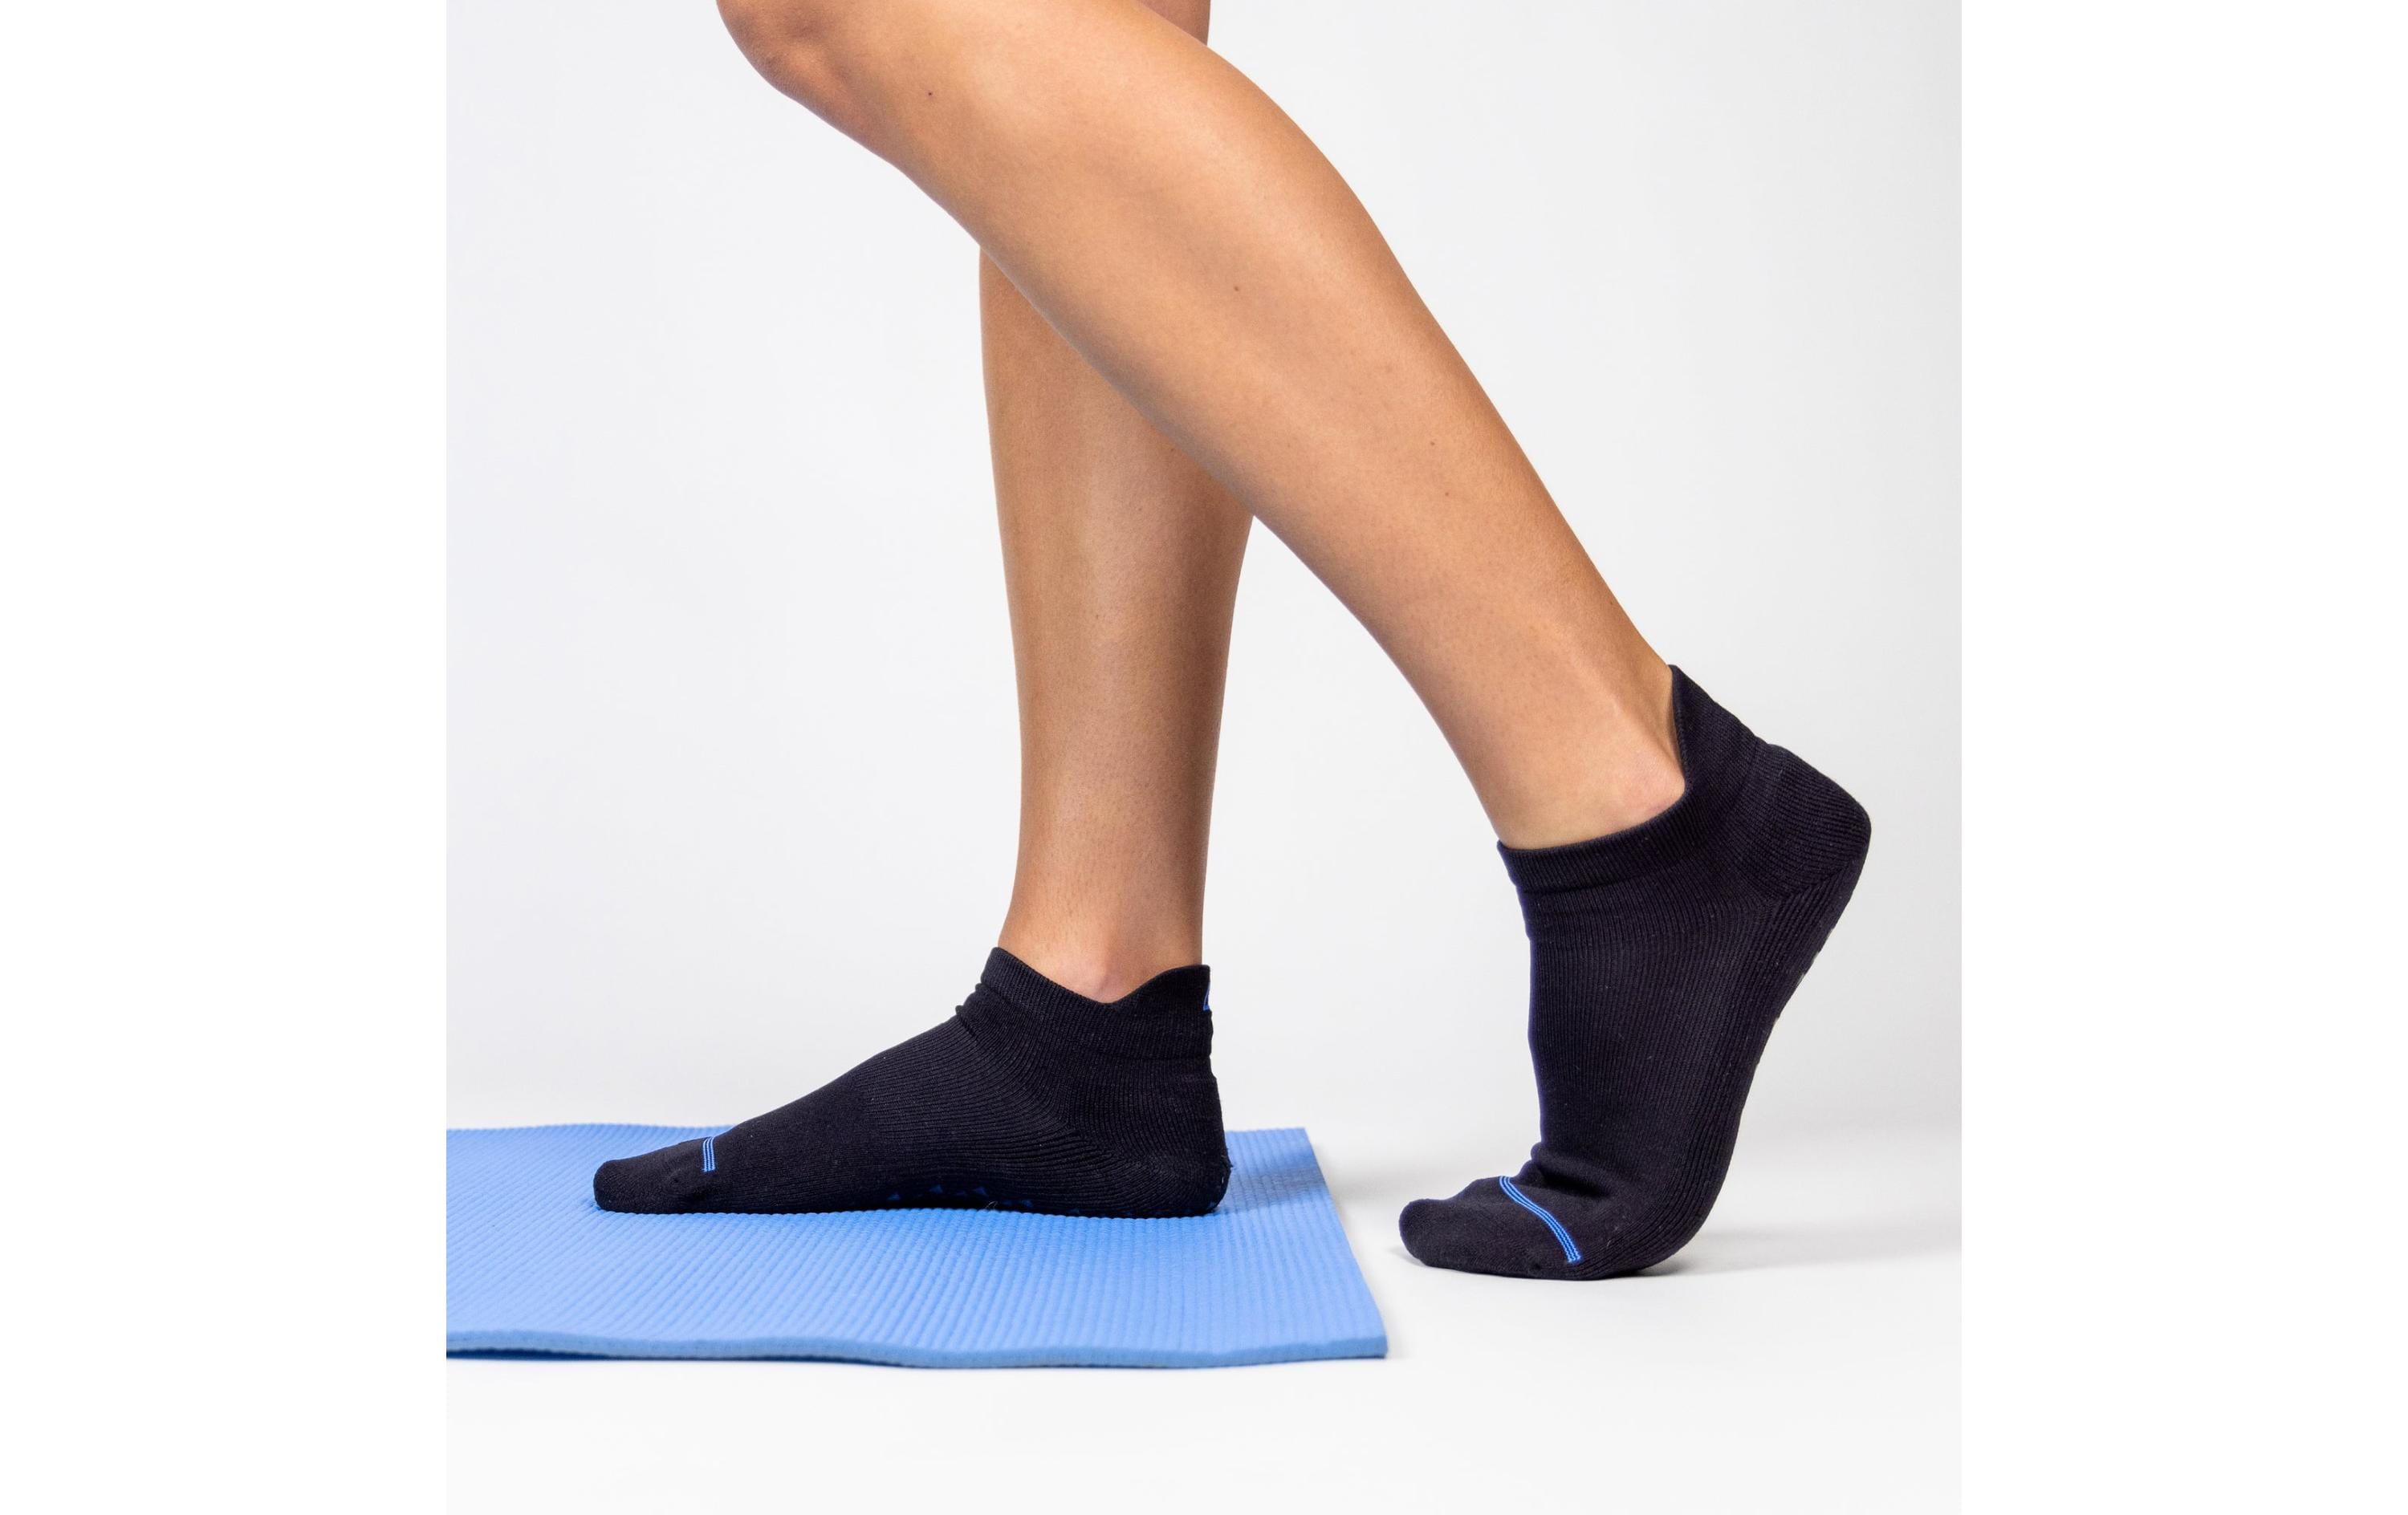 NABOSO Recovery Socks Grip XL